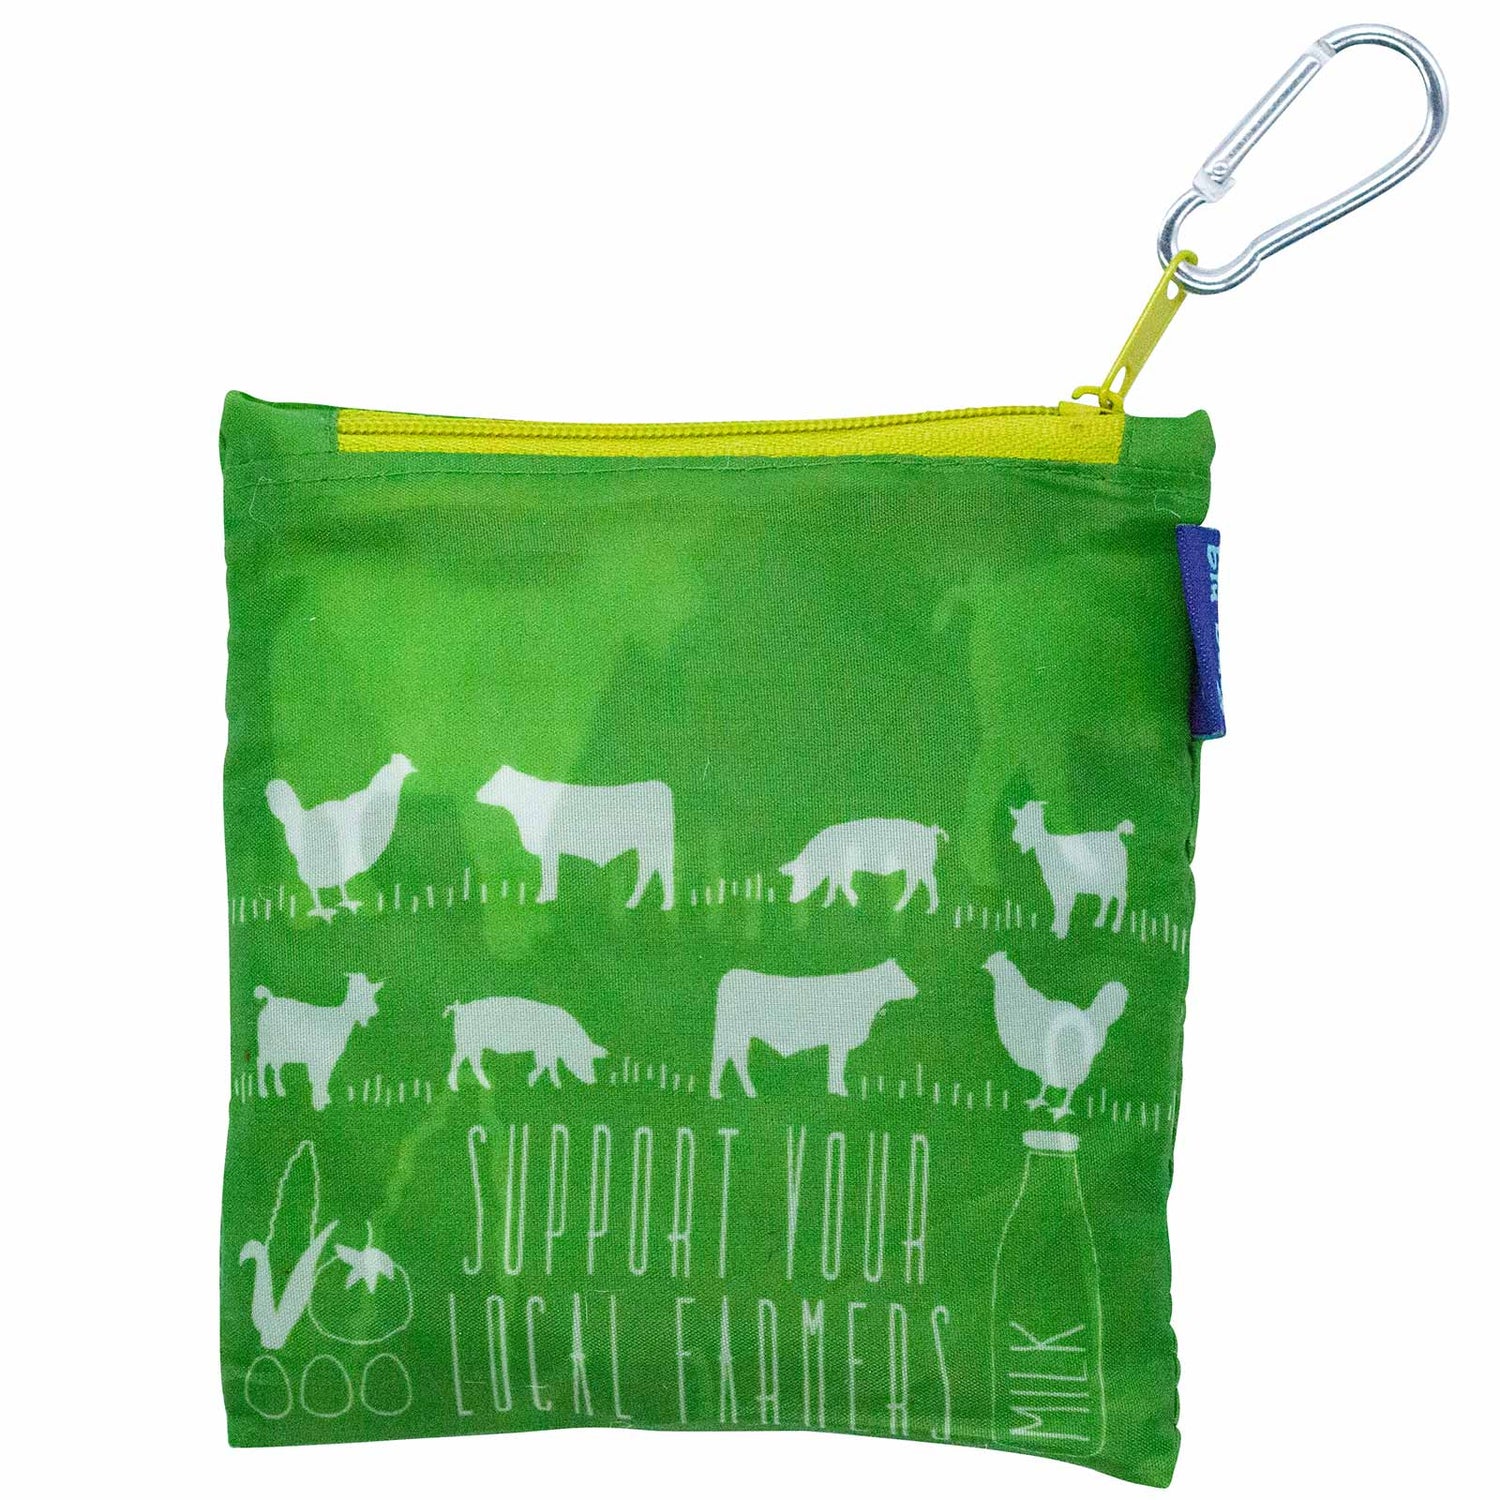 Local Farmers Blu Bag Reusable Shopping Tote - Machine Washable Reusable Shopping Bag - rockflowerpaper